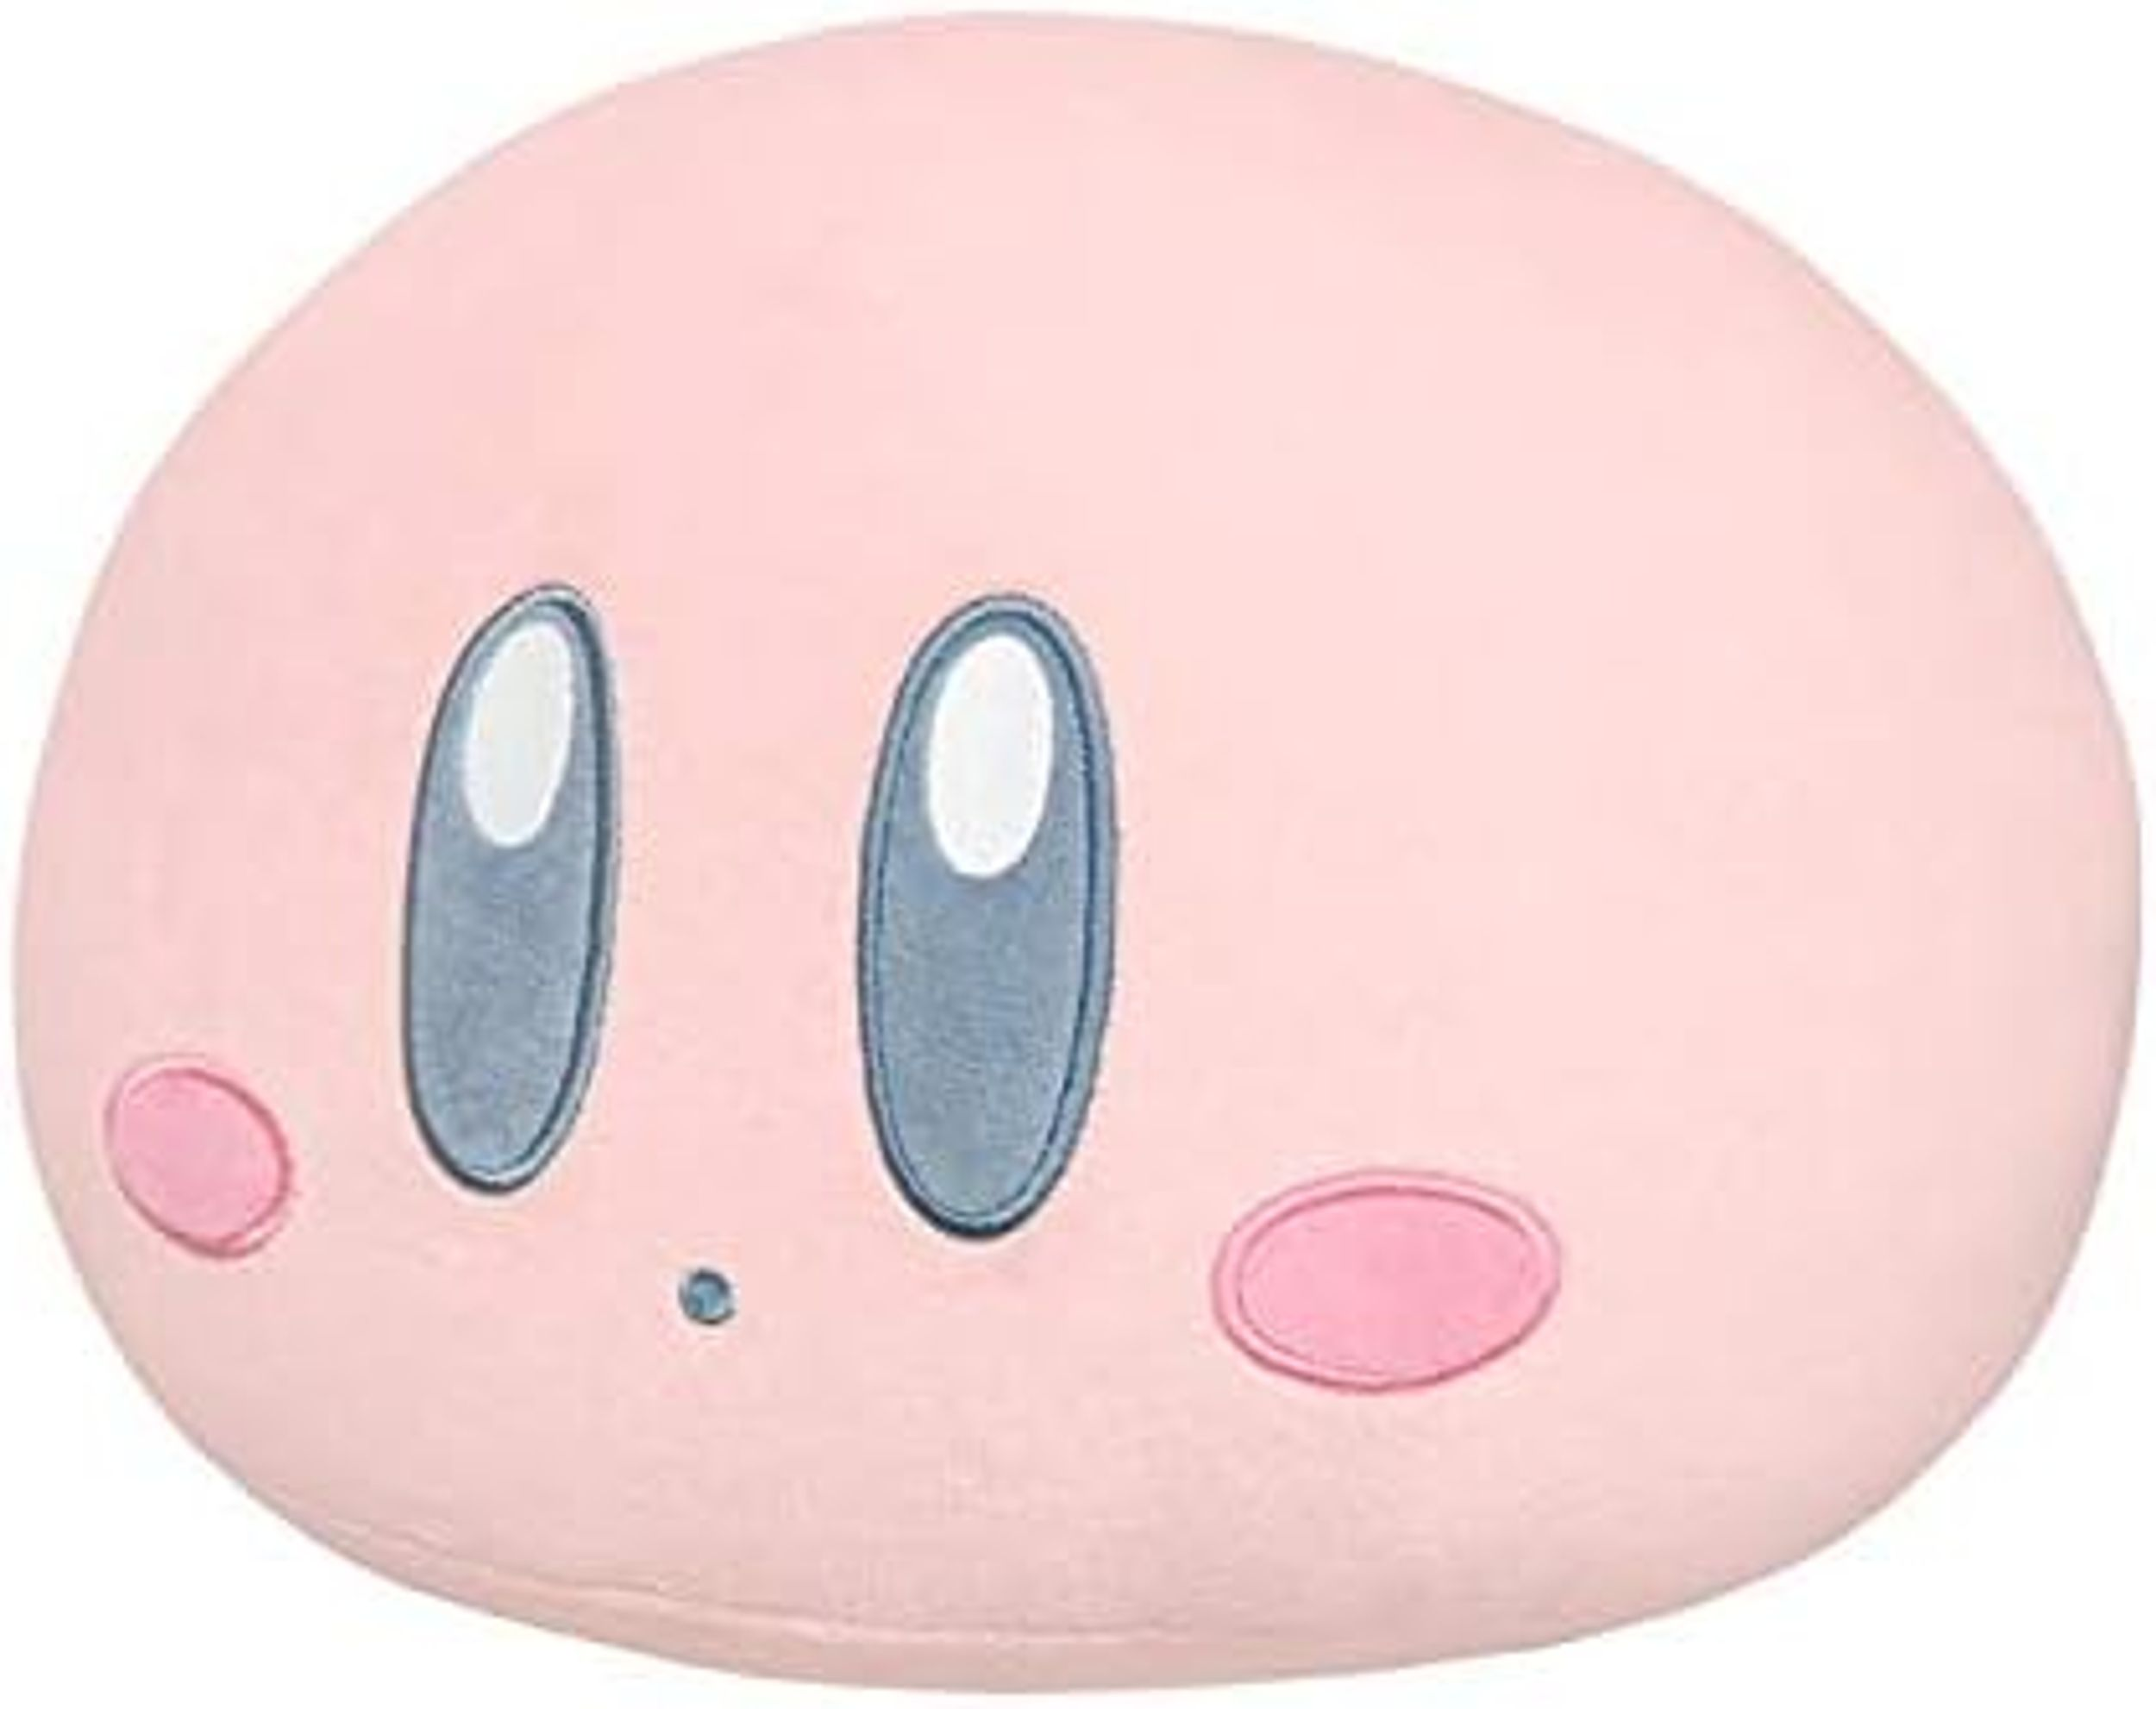 NINTENDO Kirby PoyoPoyo Plüschfigur